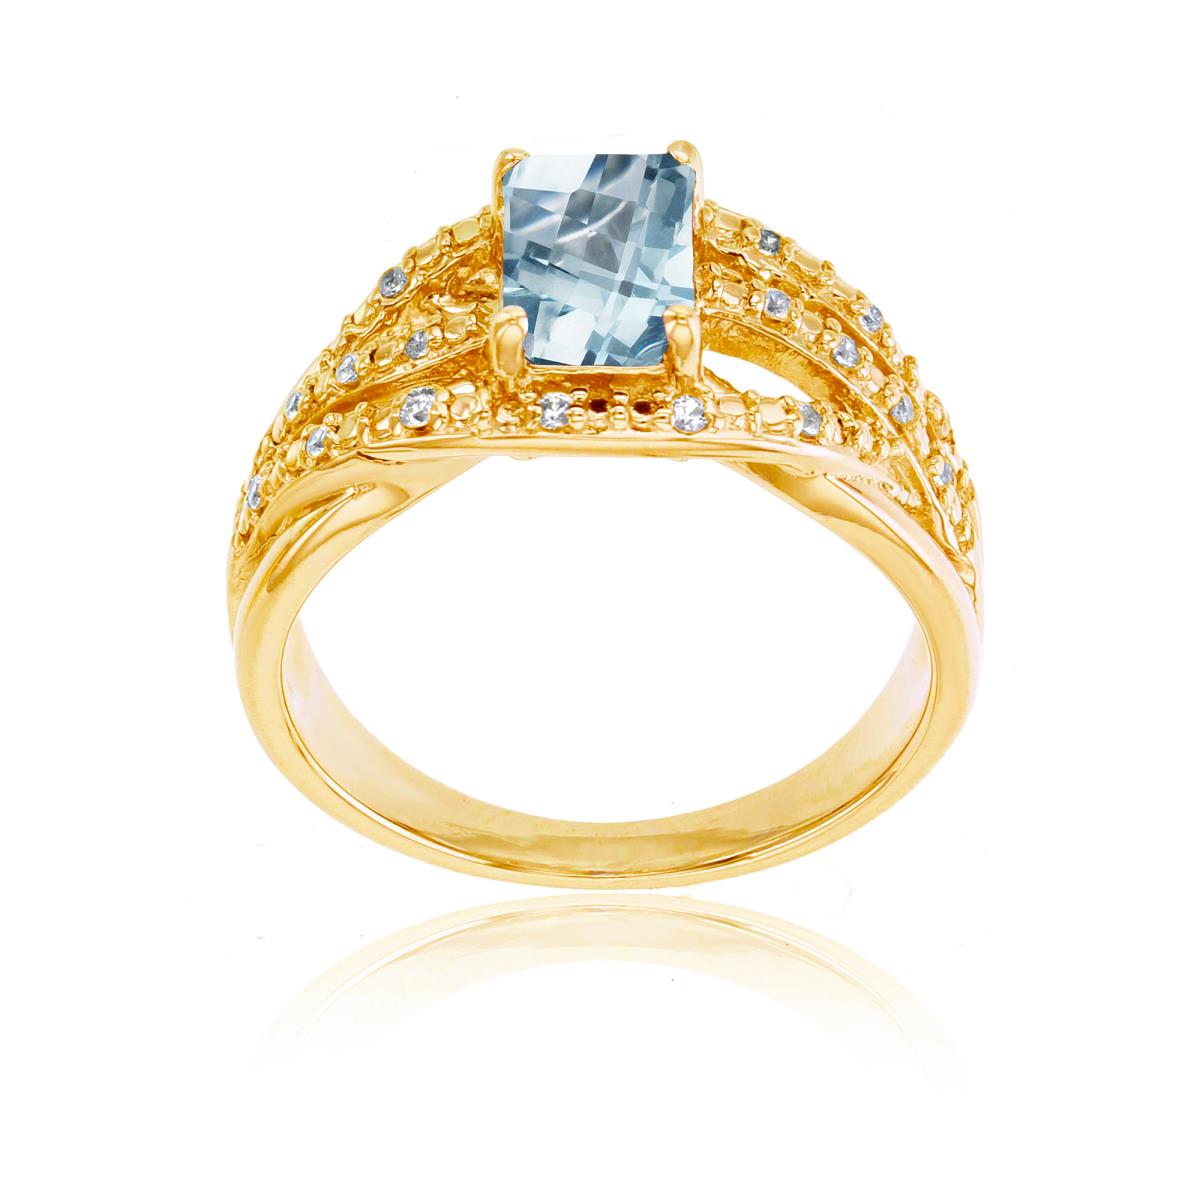 14K Yellow Gold 0.10 CTTW Rnd Diamond & 7x5mm Oct Aquamarine Ring